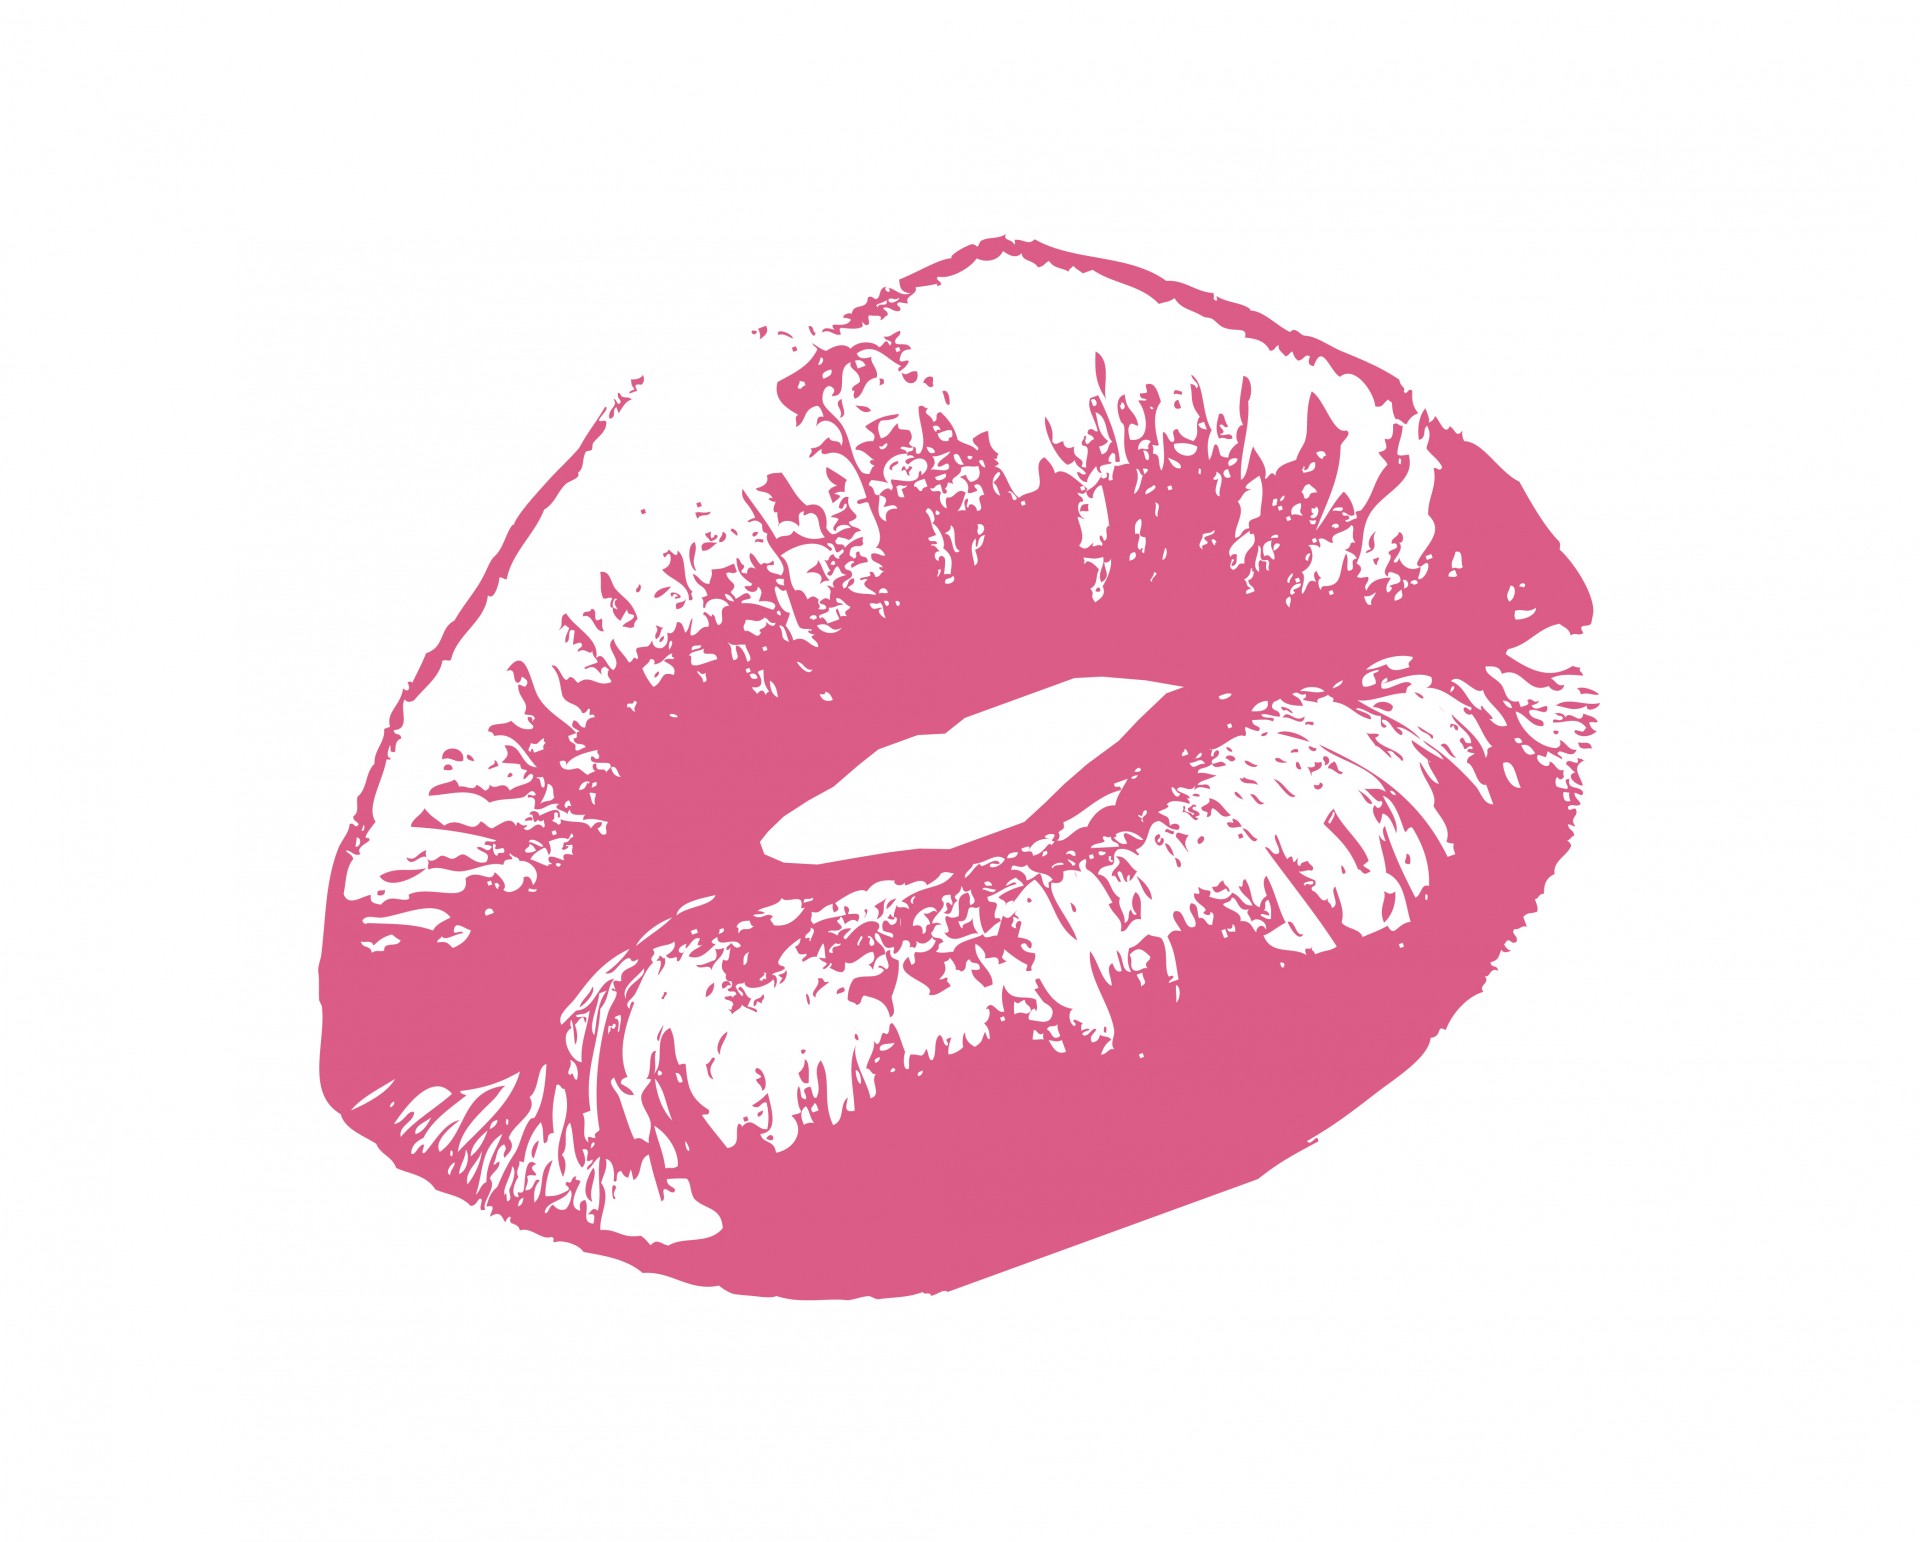 Lips of woman clipart free stock photo public domain